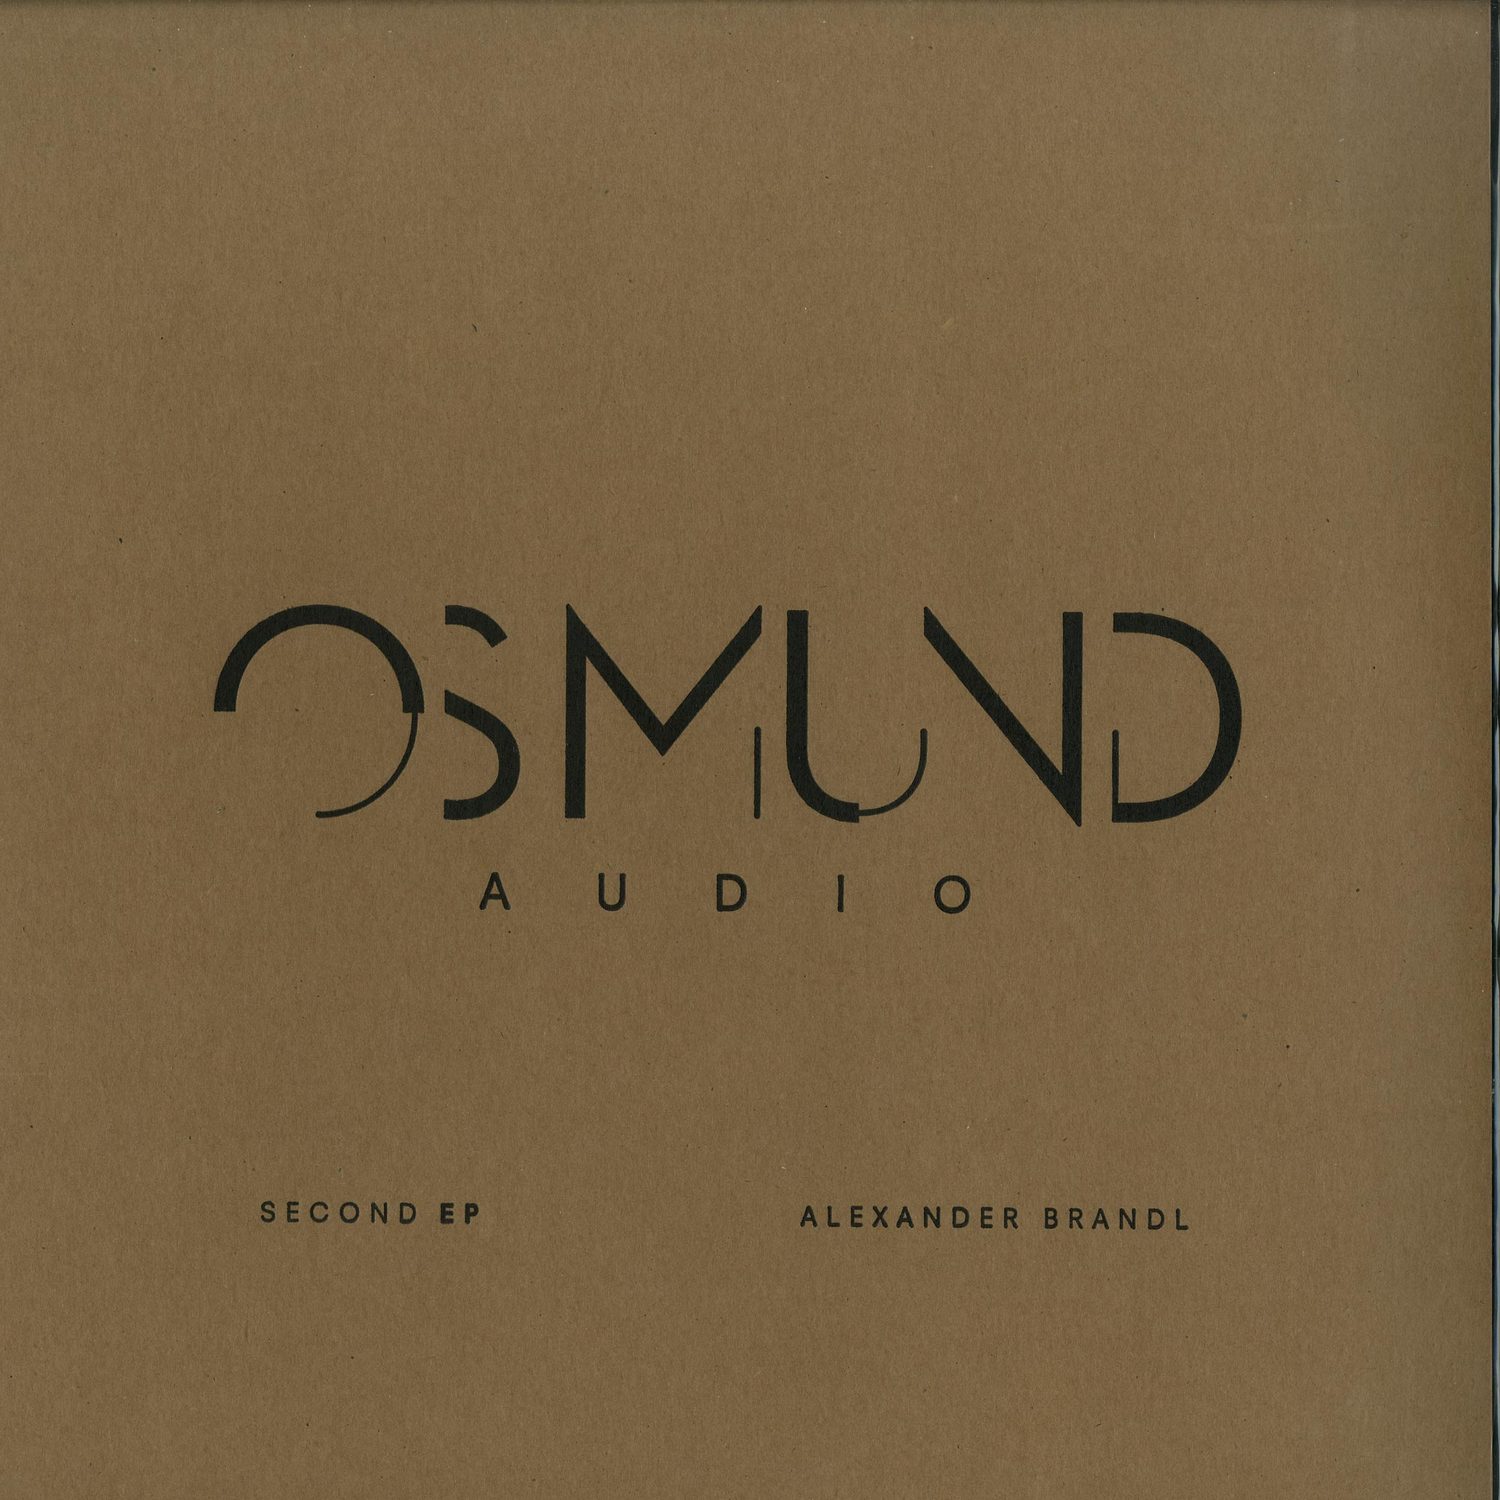 Alexander Brandl - SECOND EP